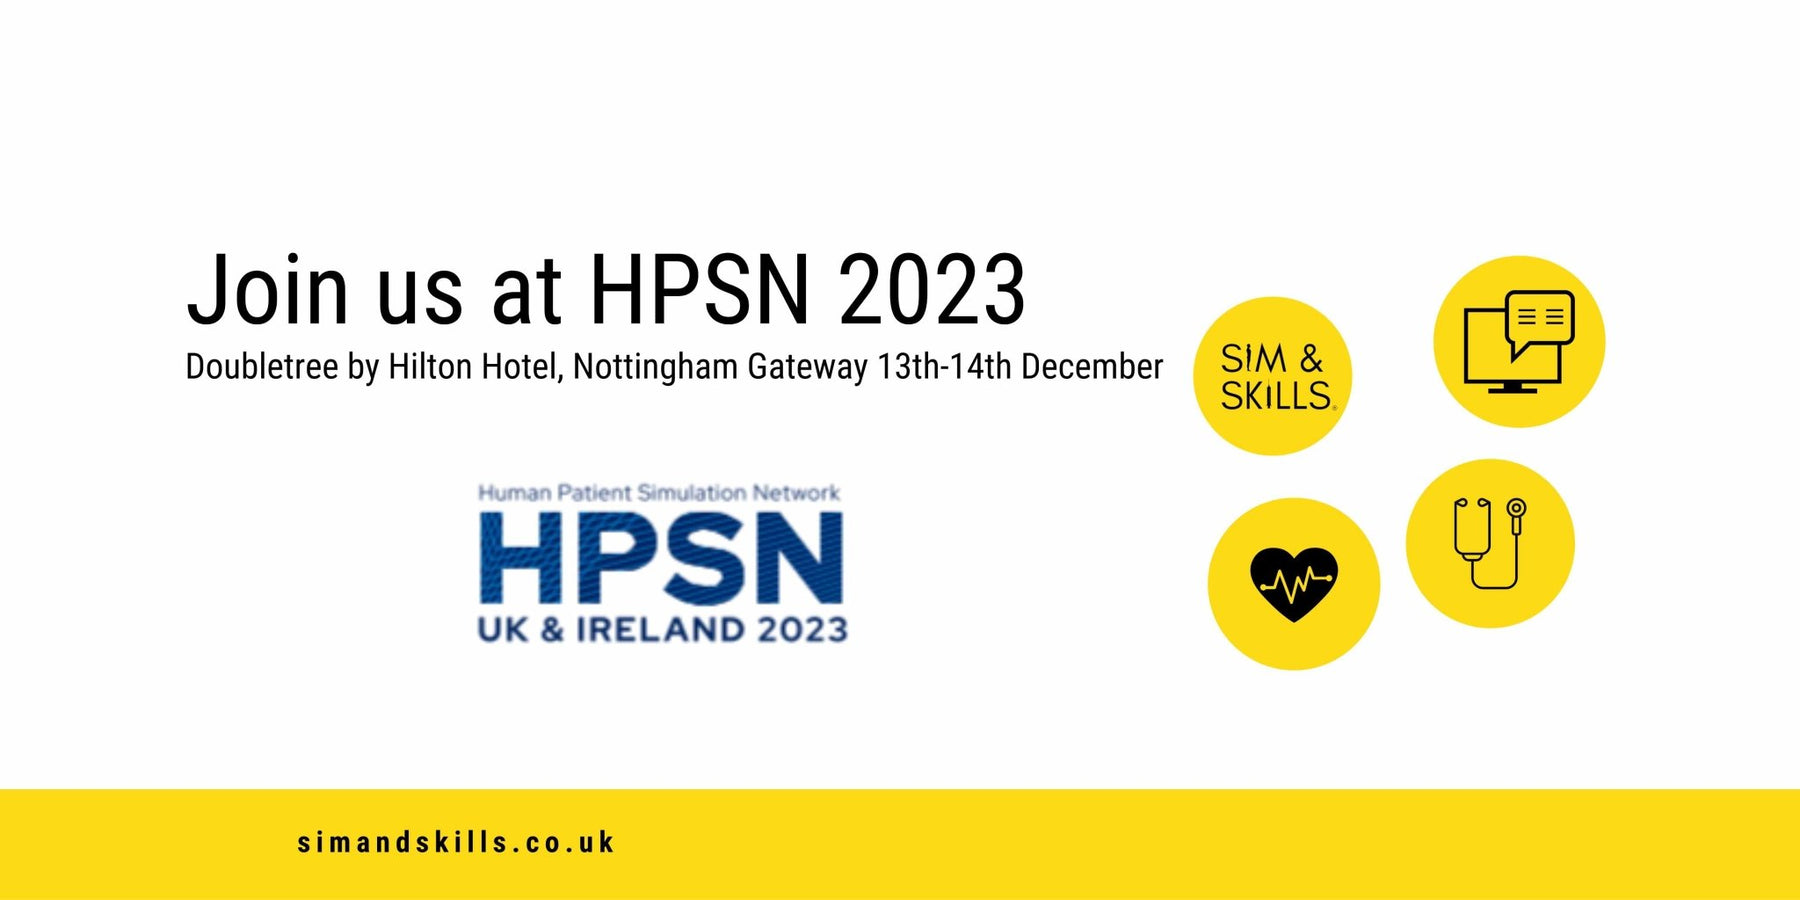 Join us at HPSN 2023 in Nottingham - Sim & Skills